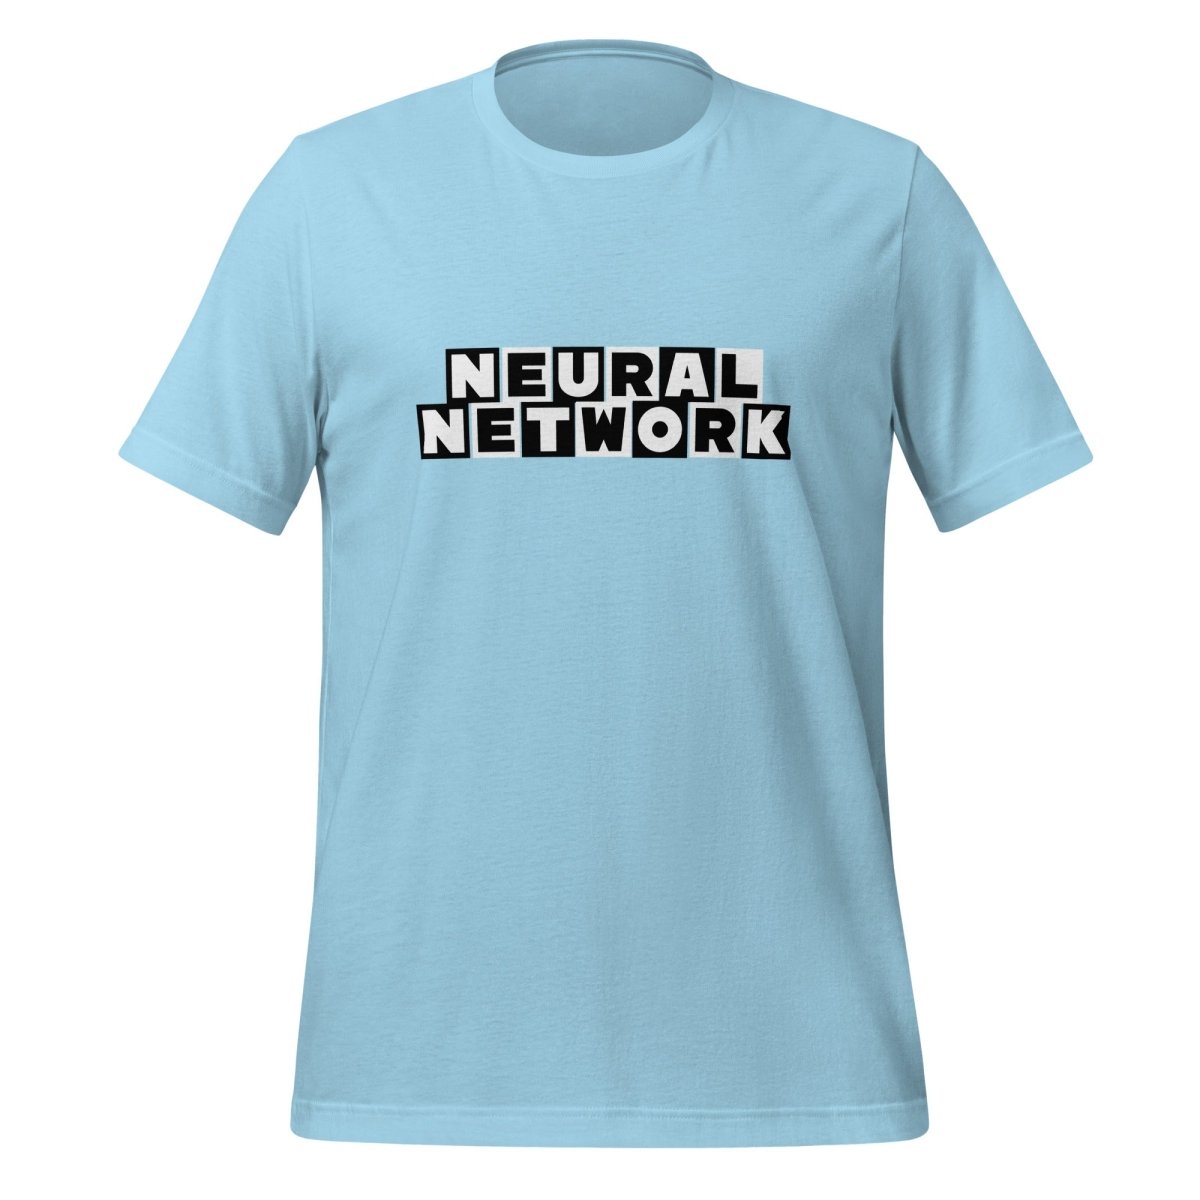 NEURAL NETWORK T - Shirt (unisex) - Ocean Blue - AI Store